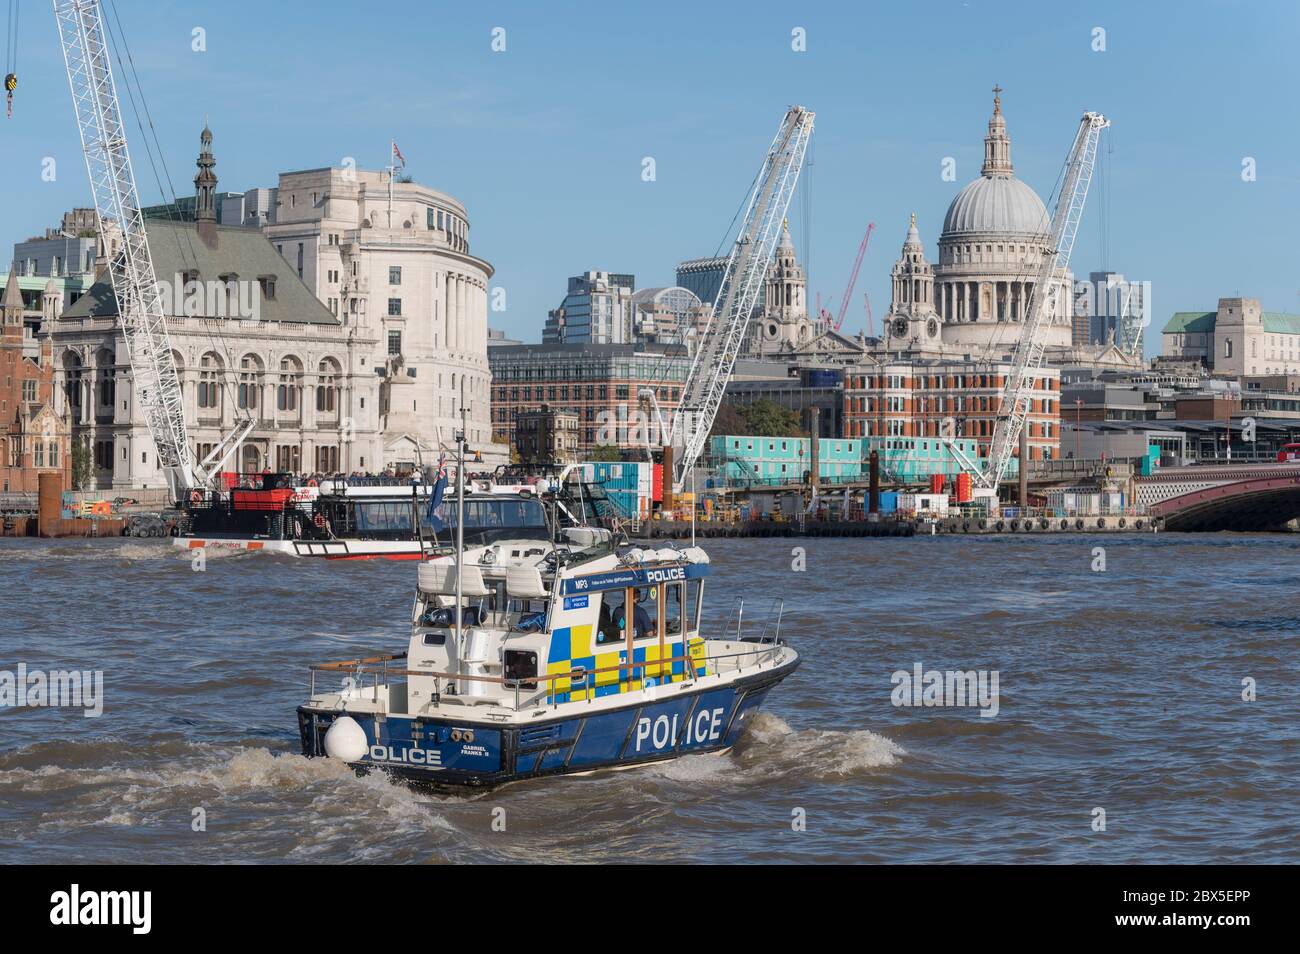 Metropolitan police boat patrolling the River Thames, London, England. Stock Photo